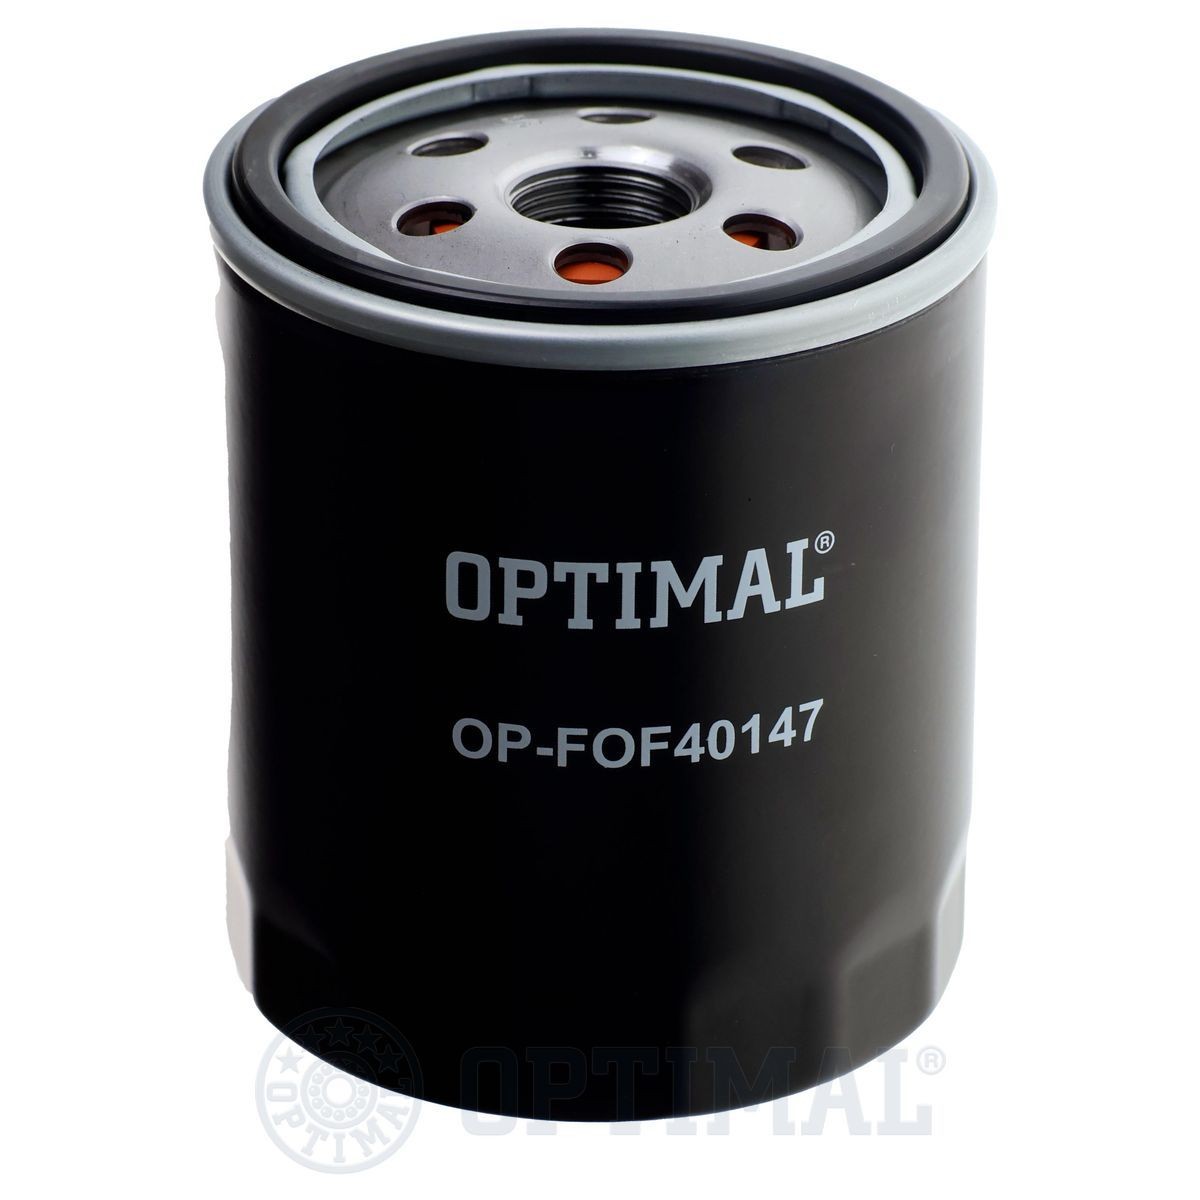 OPTIMAL OP-FOF40147 Oil filter 90915TB00100